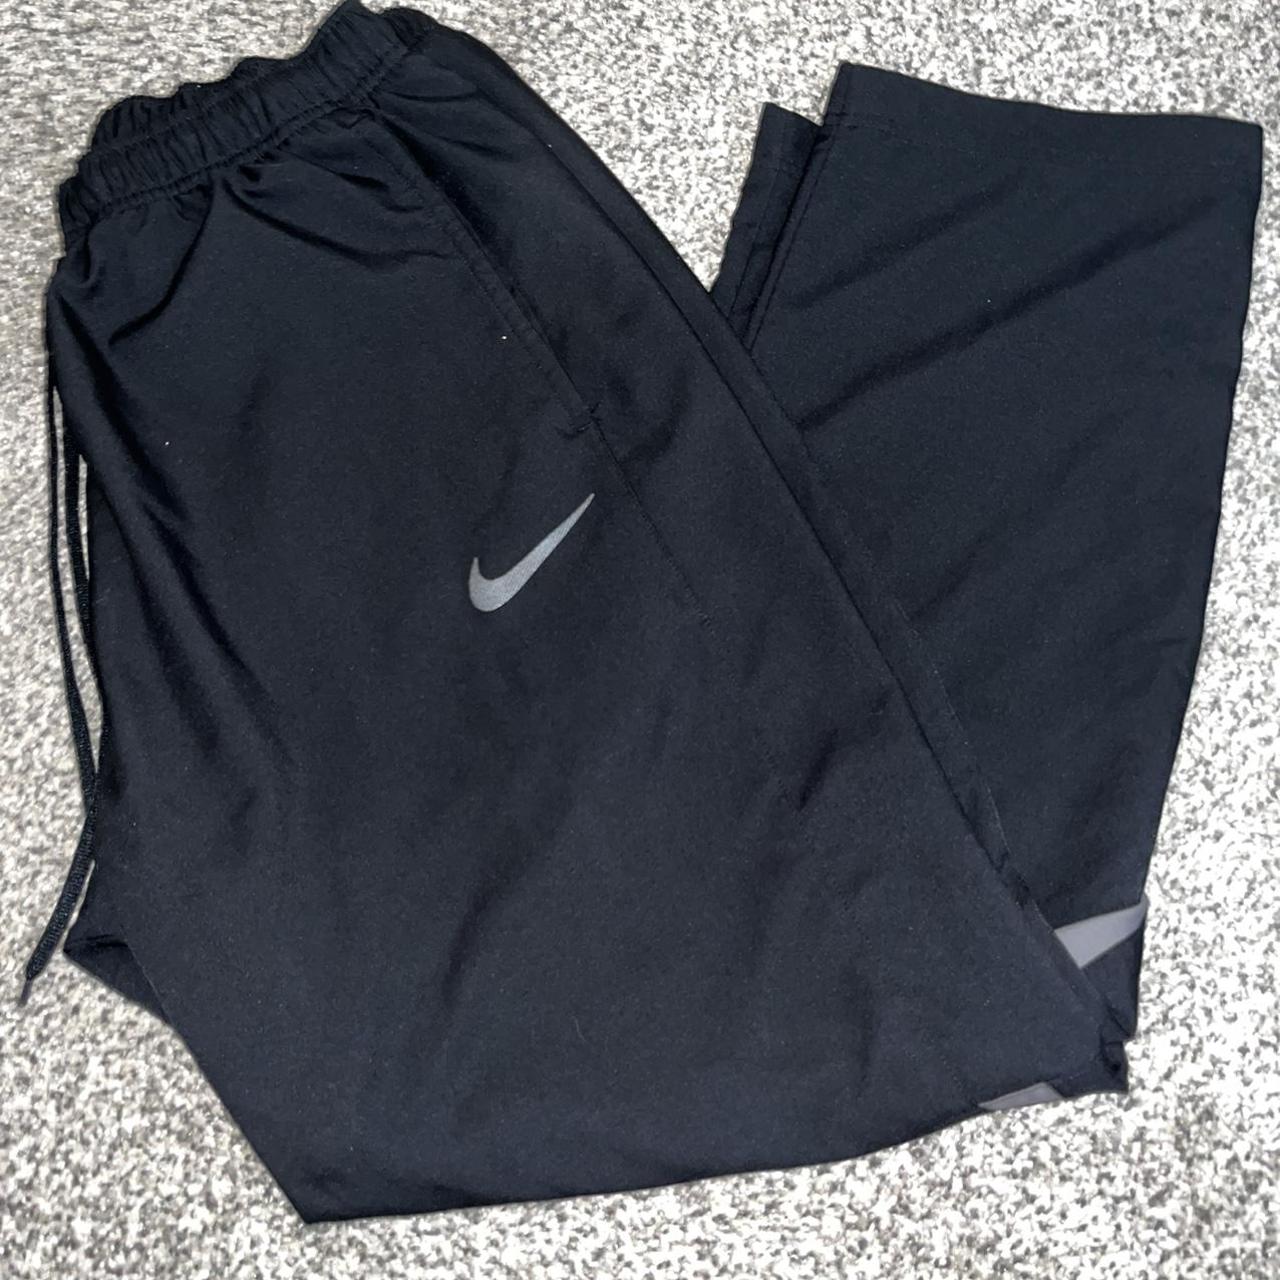 Nike Men's Black and Grey Trousers | Depop